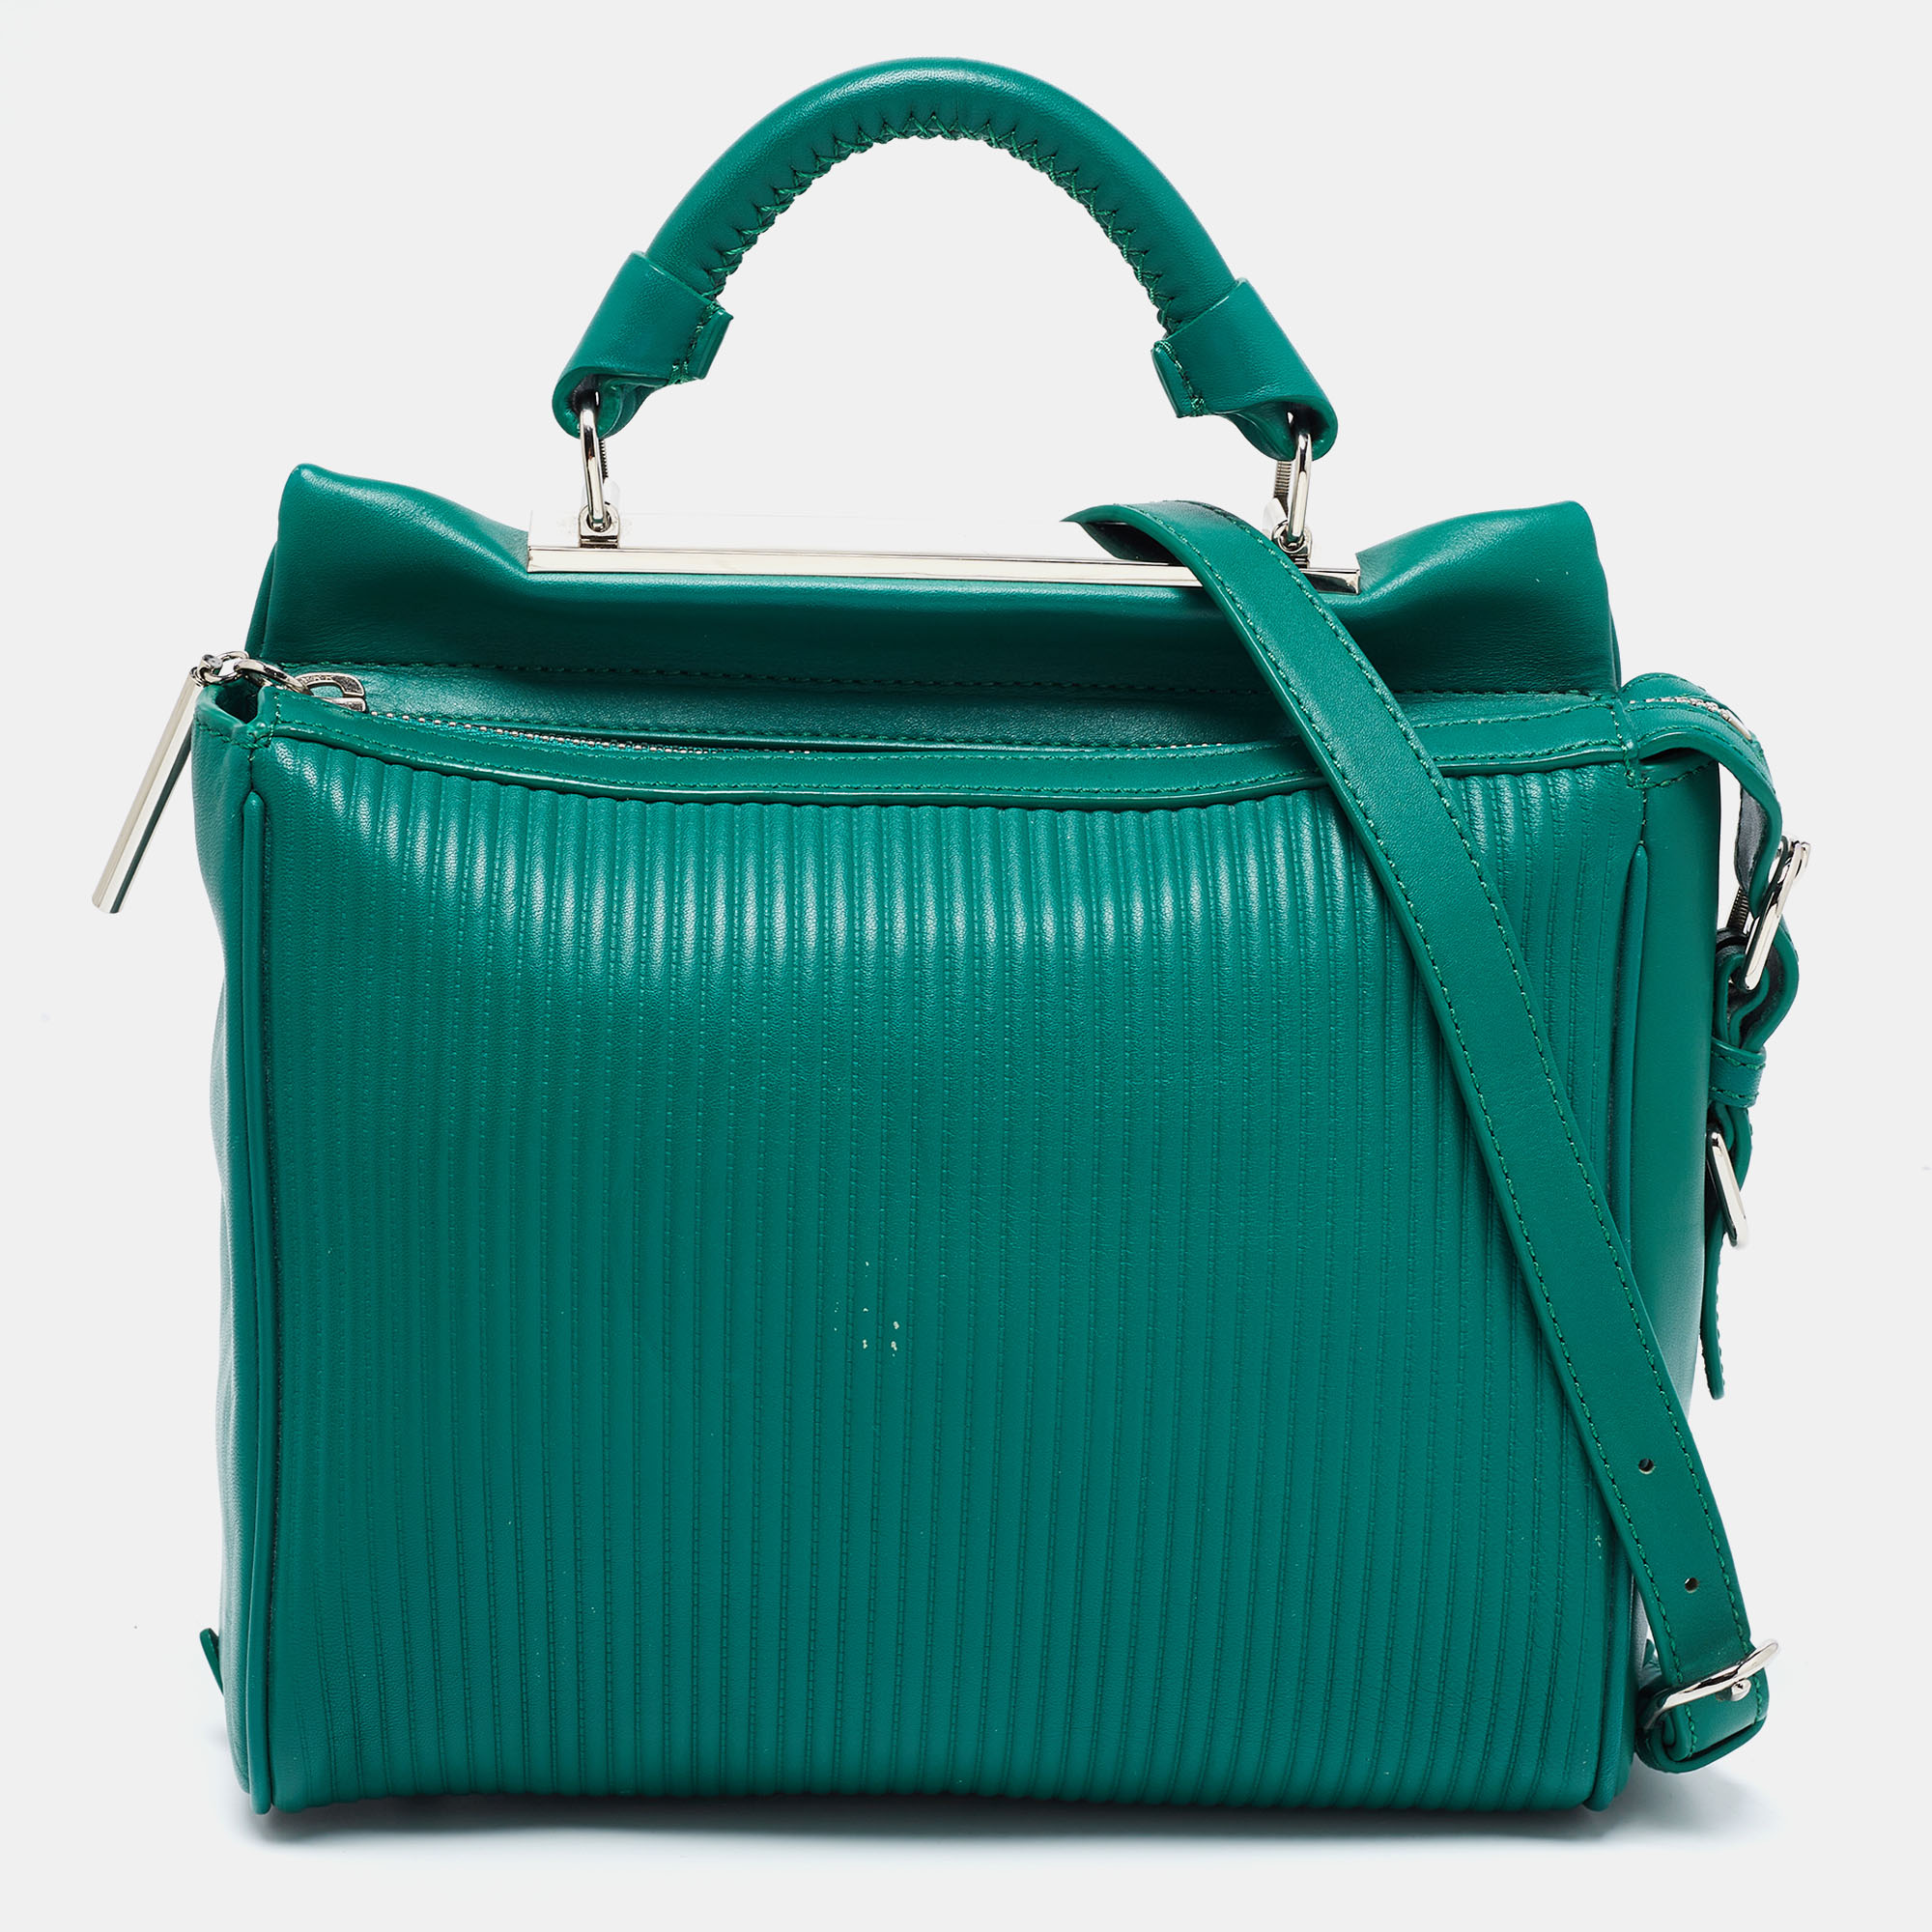 3.1 phillip lim 3.1 philip lim green leather ryder top handle bag